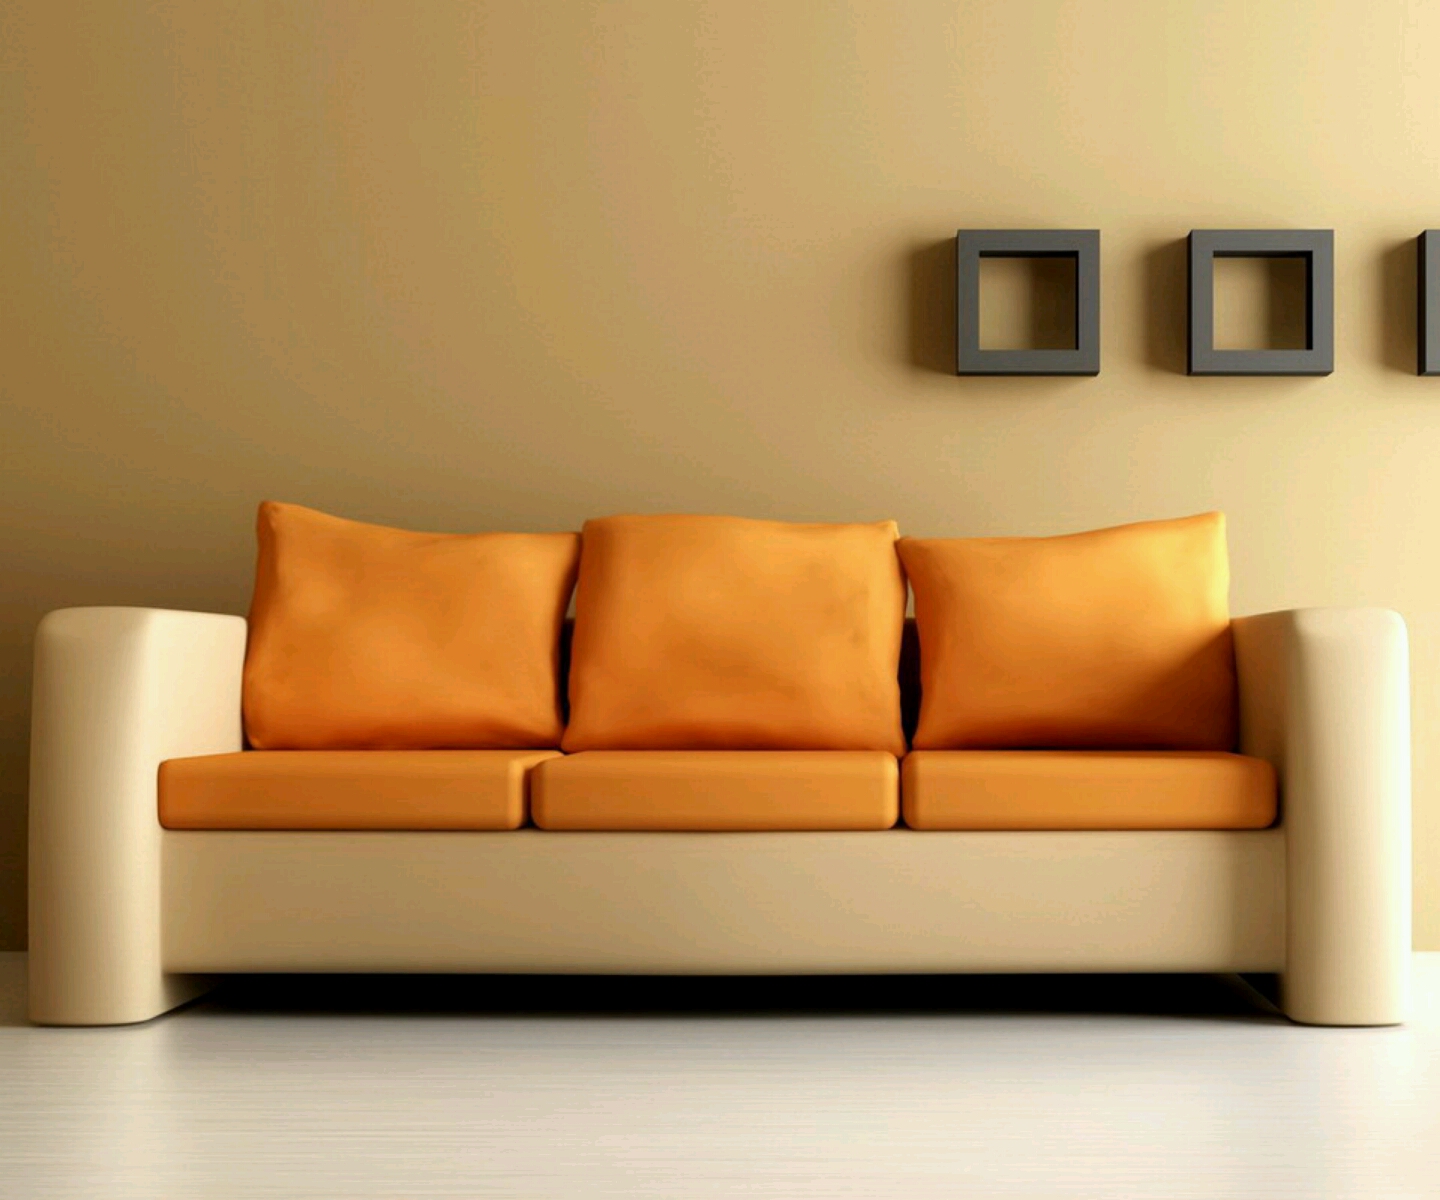 Beautiful imoderni sofa ifurniturei designs An Interior Design